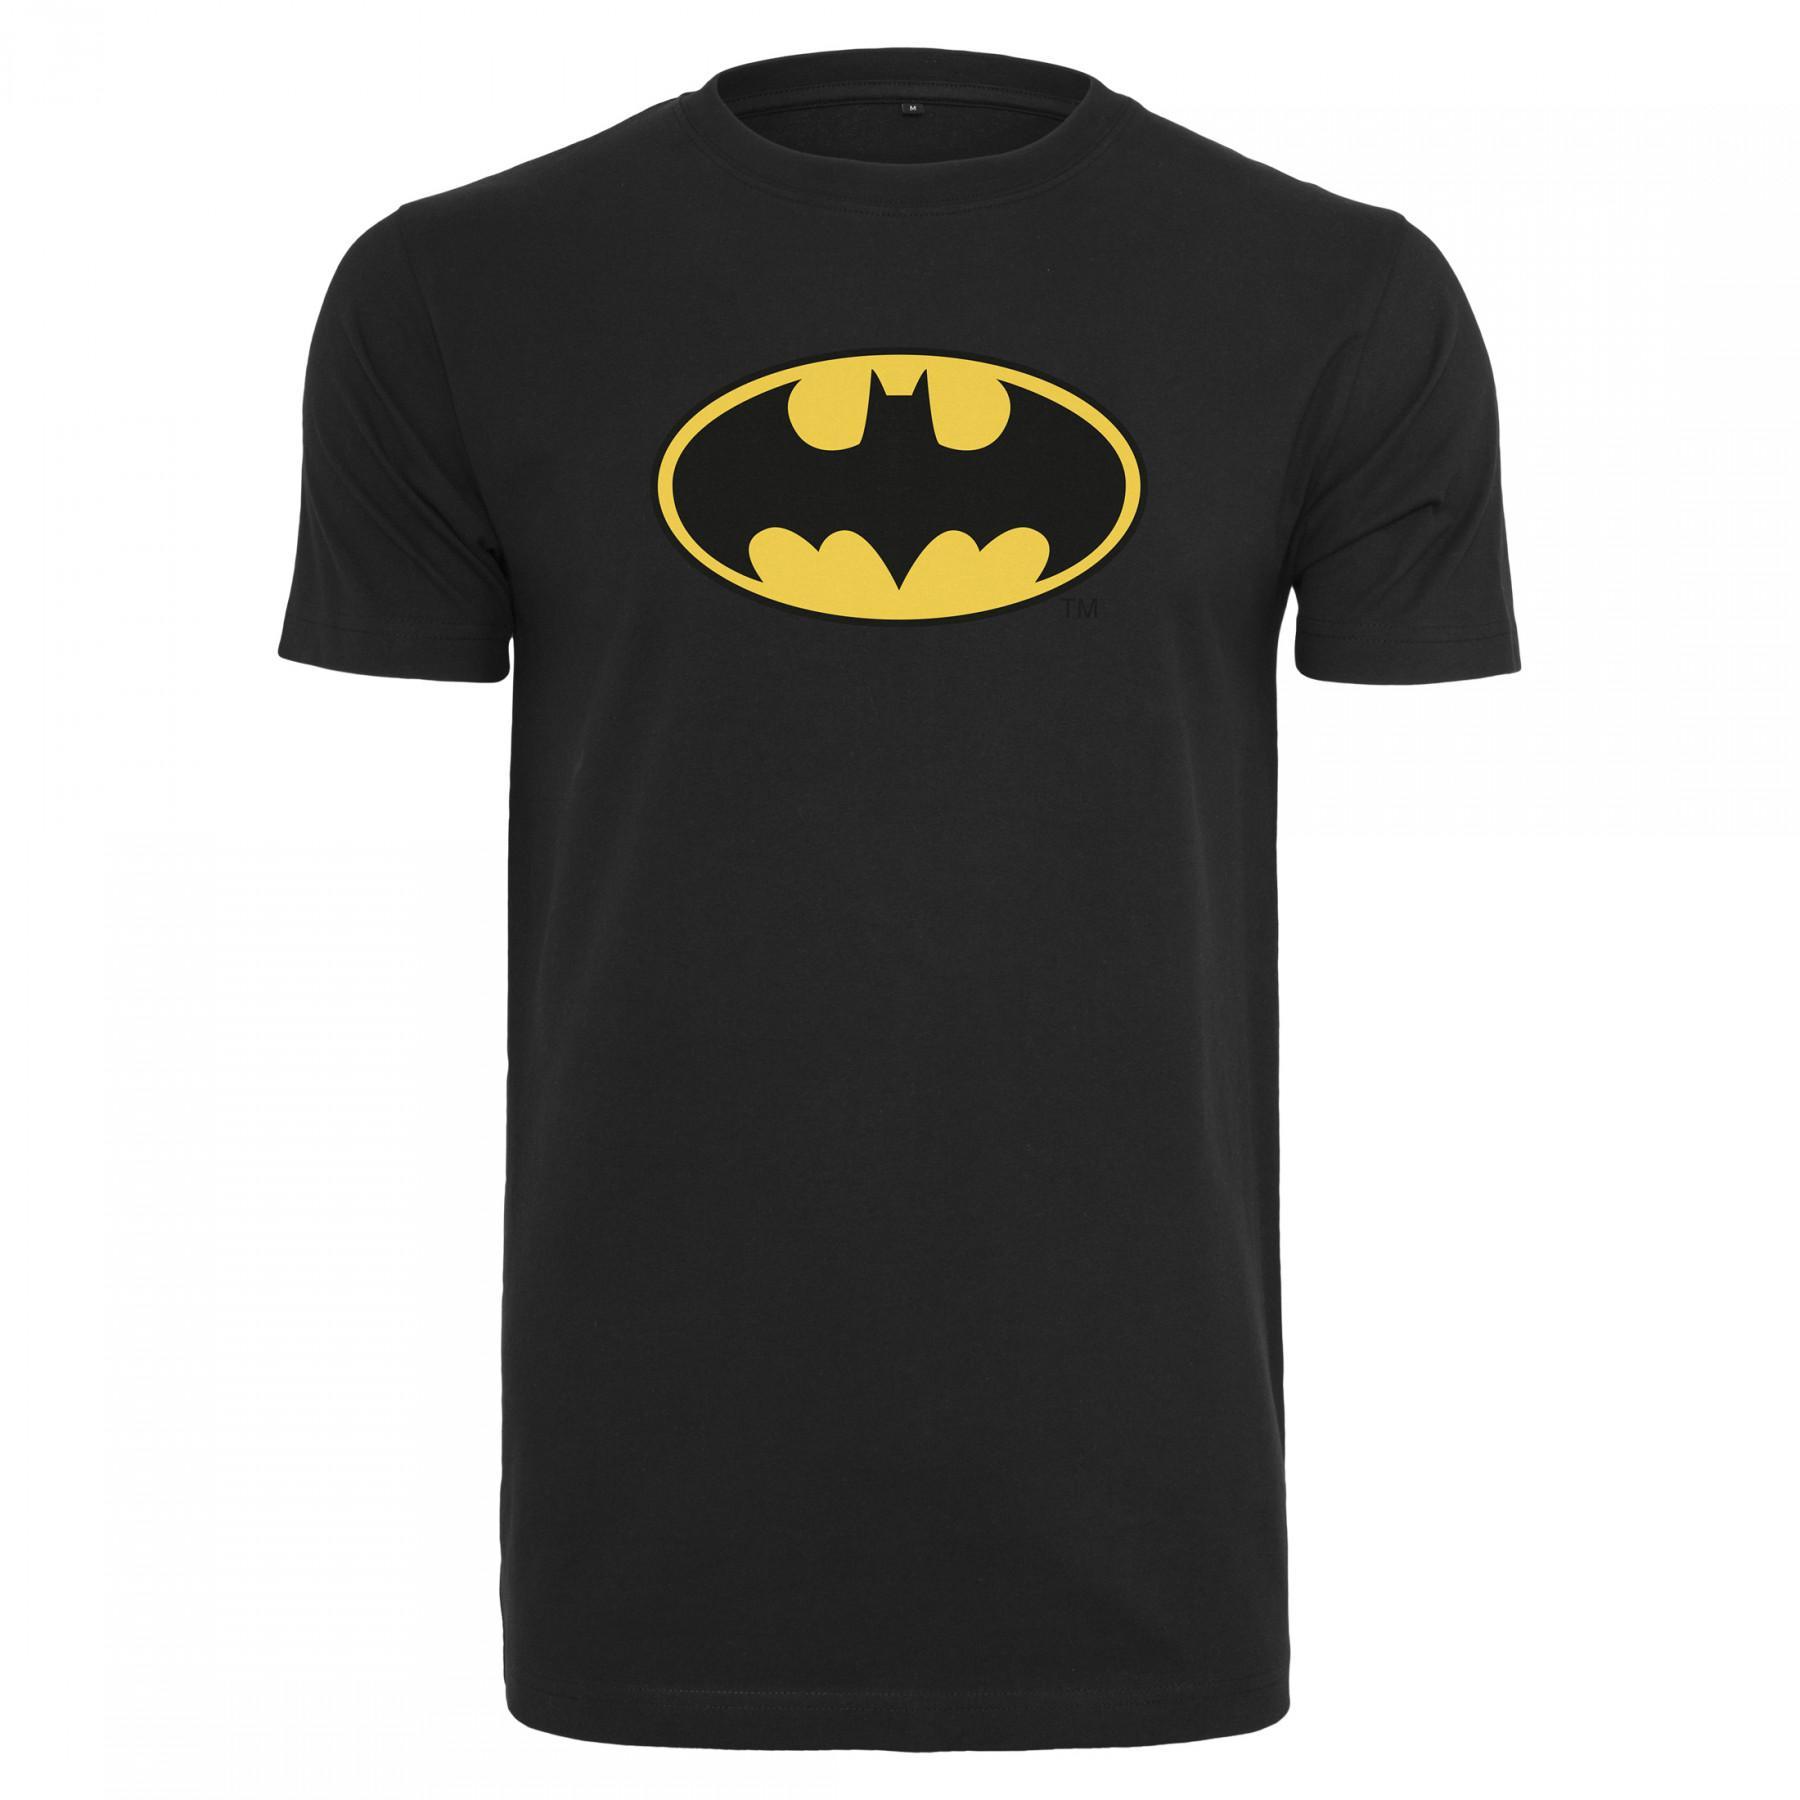 T-shirt urban classic batman logo gt